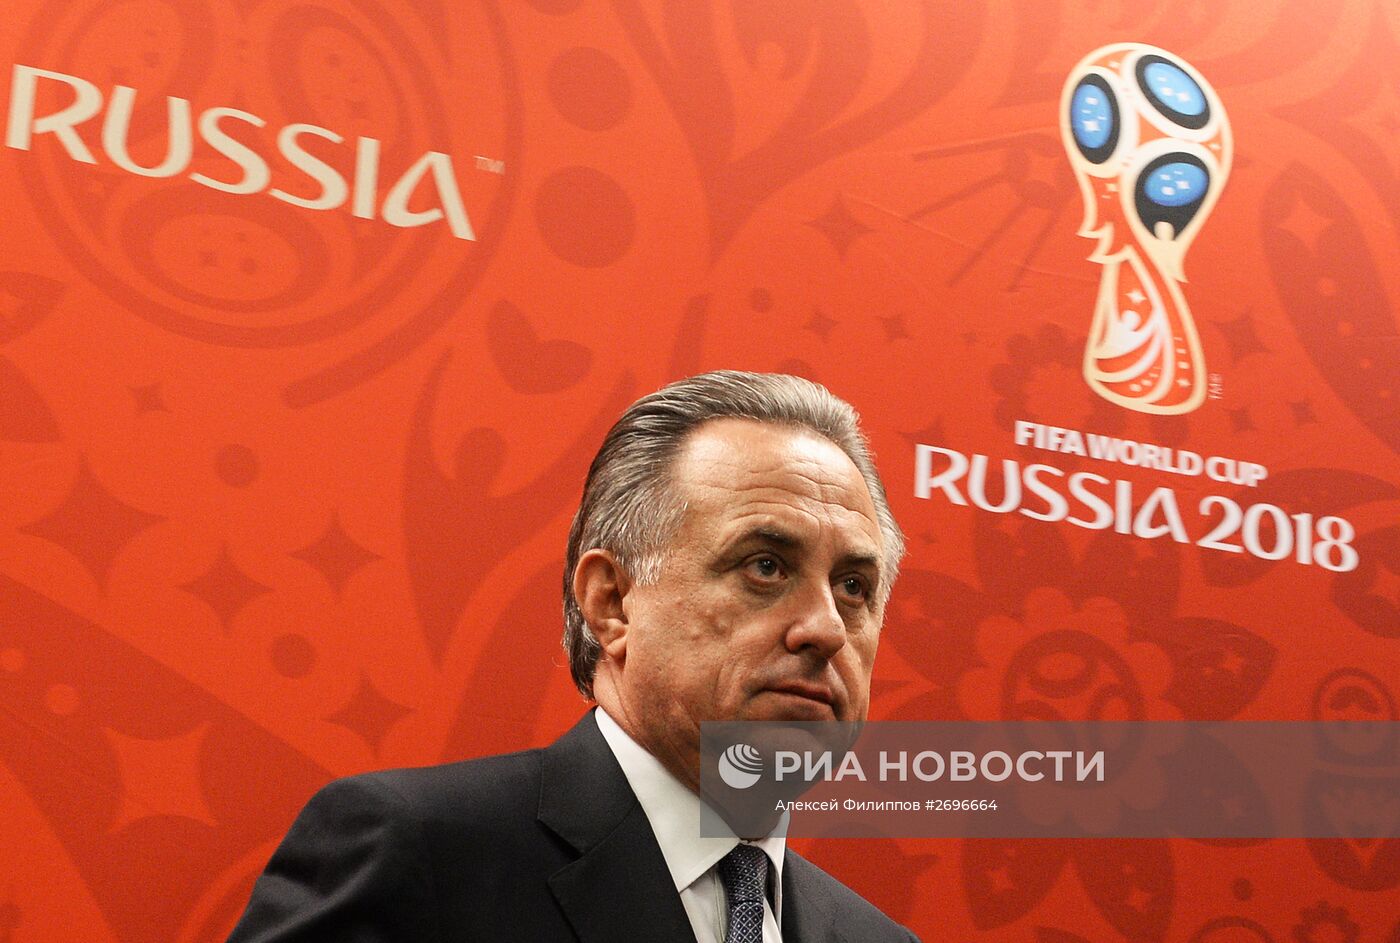 Пресс-брифинг по итогам визита FIFA и Оргкомитета "Россия-2018" на стадионы ЧМ-2018